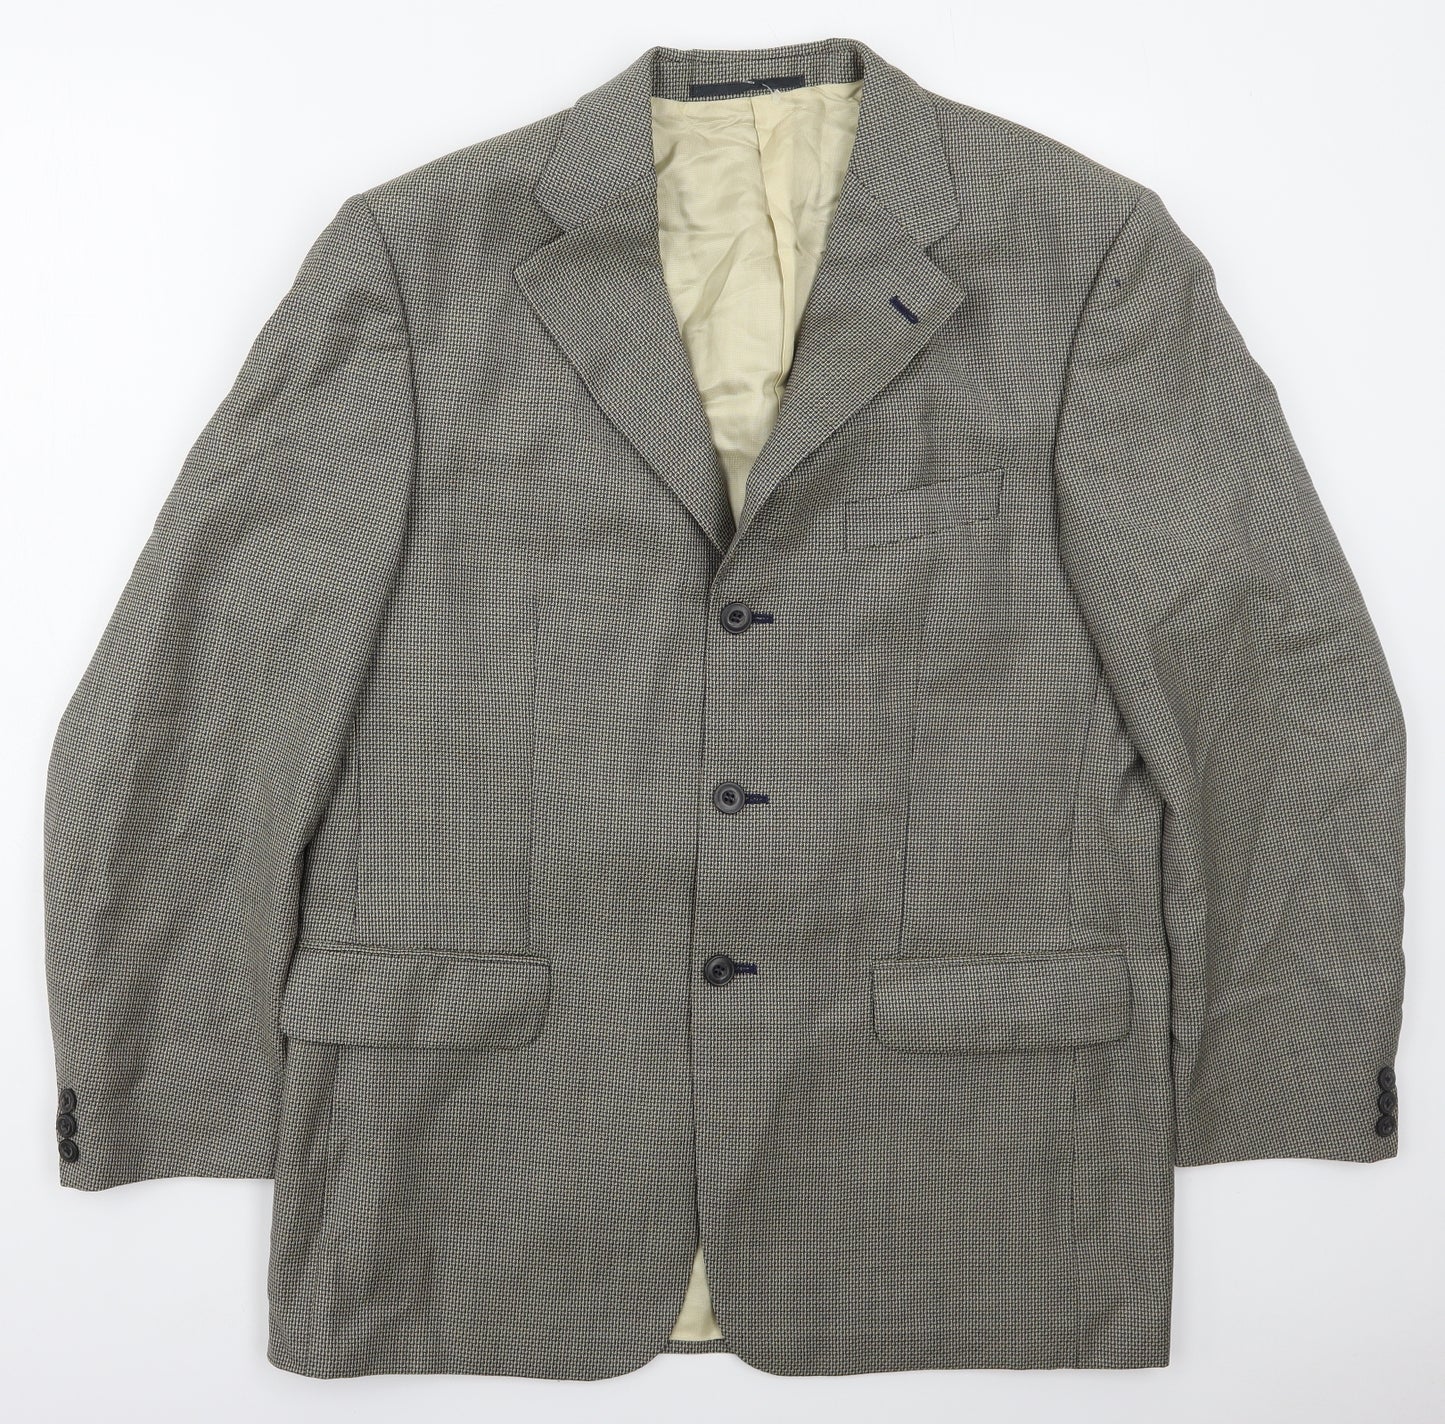 Douglas Mens Beige Houndstooth Wool Jacket Suit Jacket Size 40